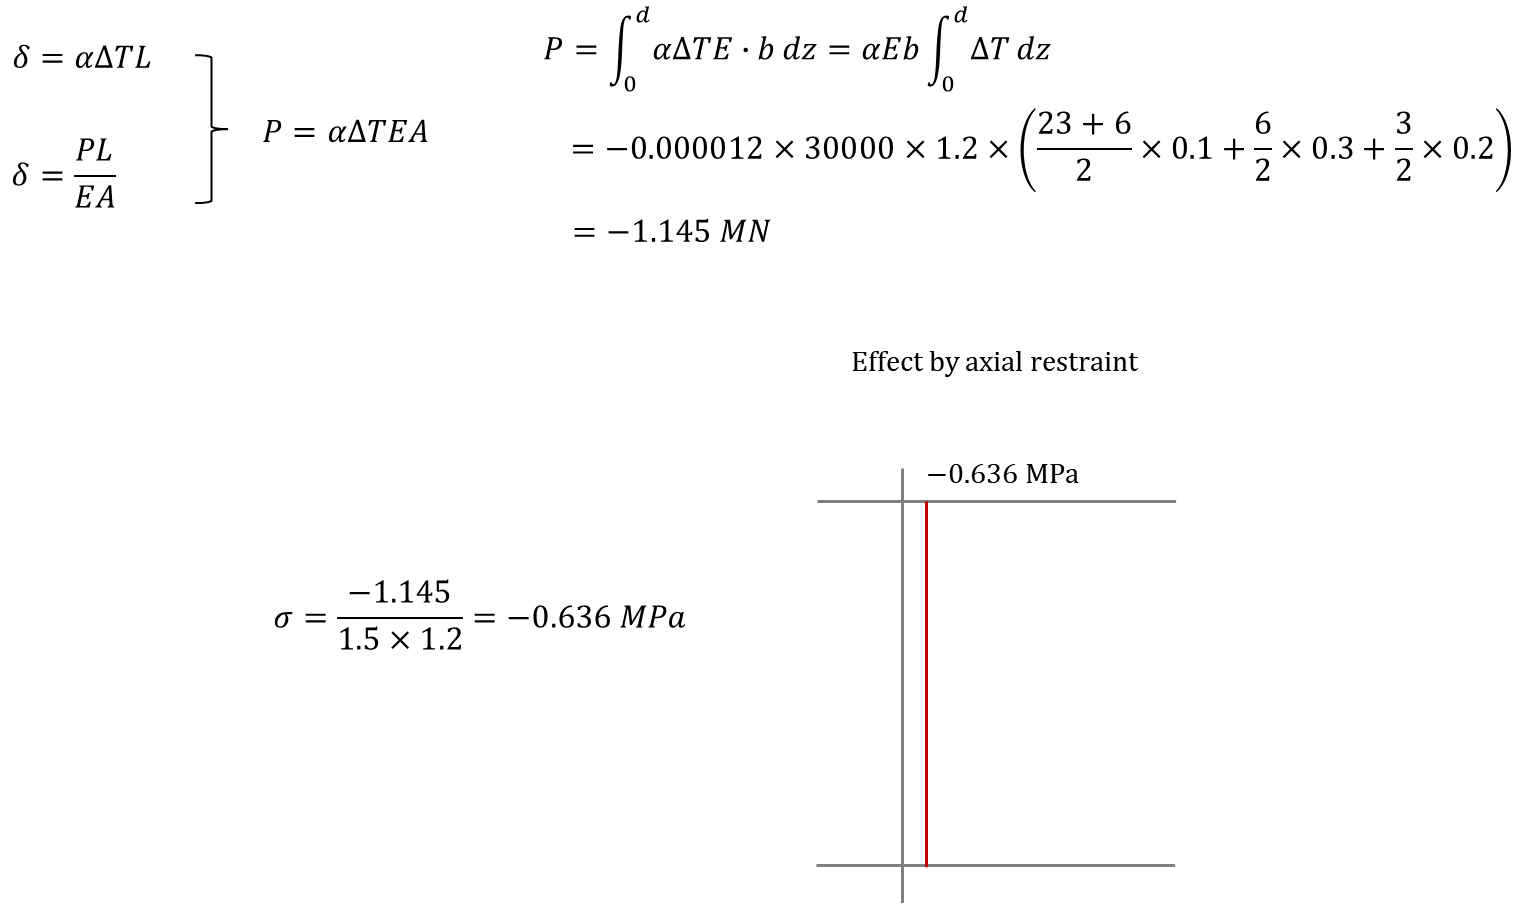 Figure7. Effect of axial restraint